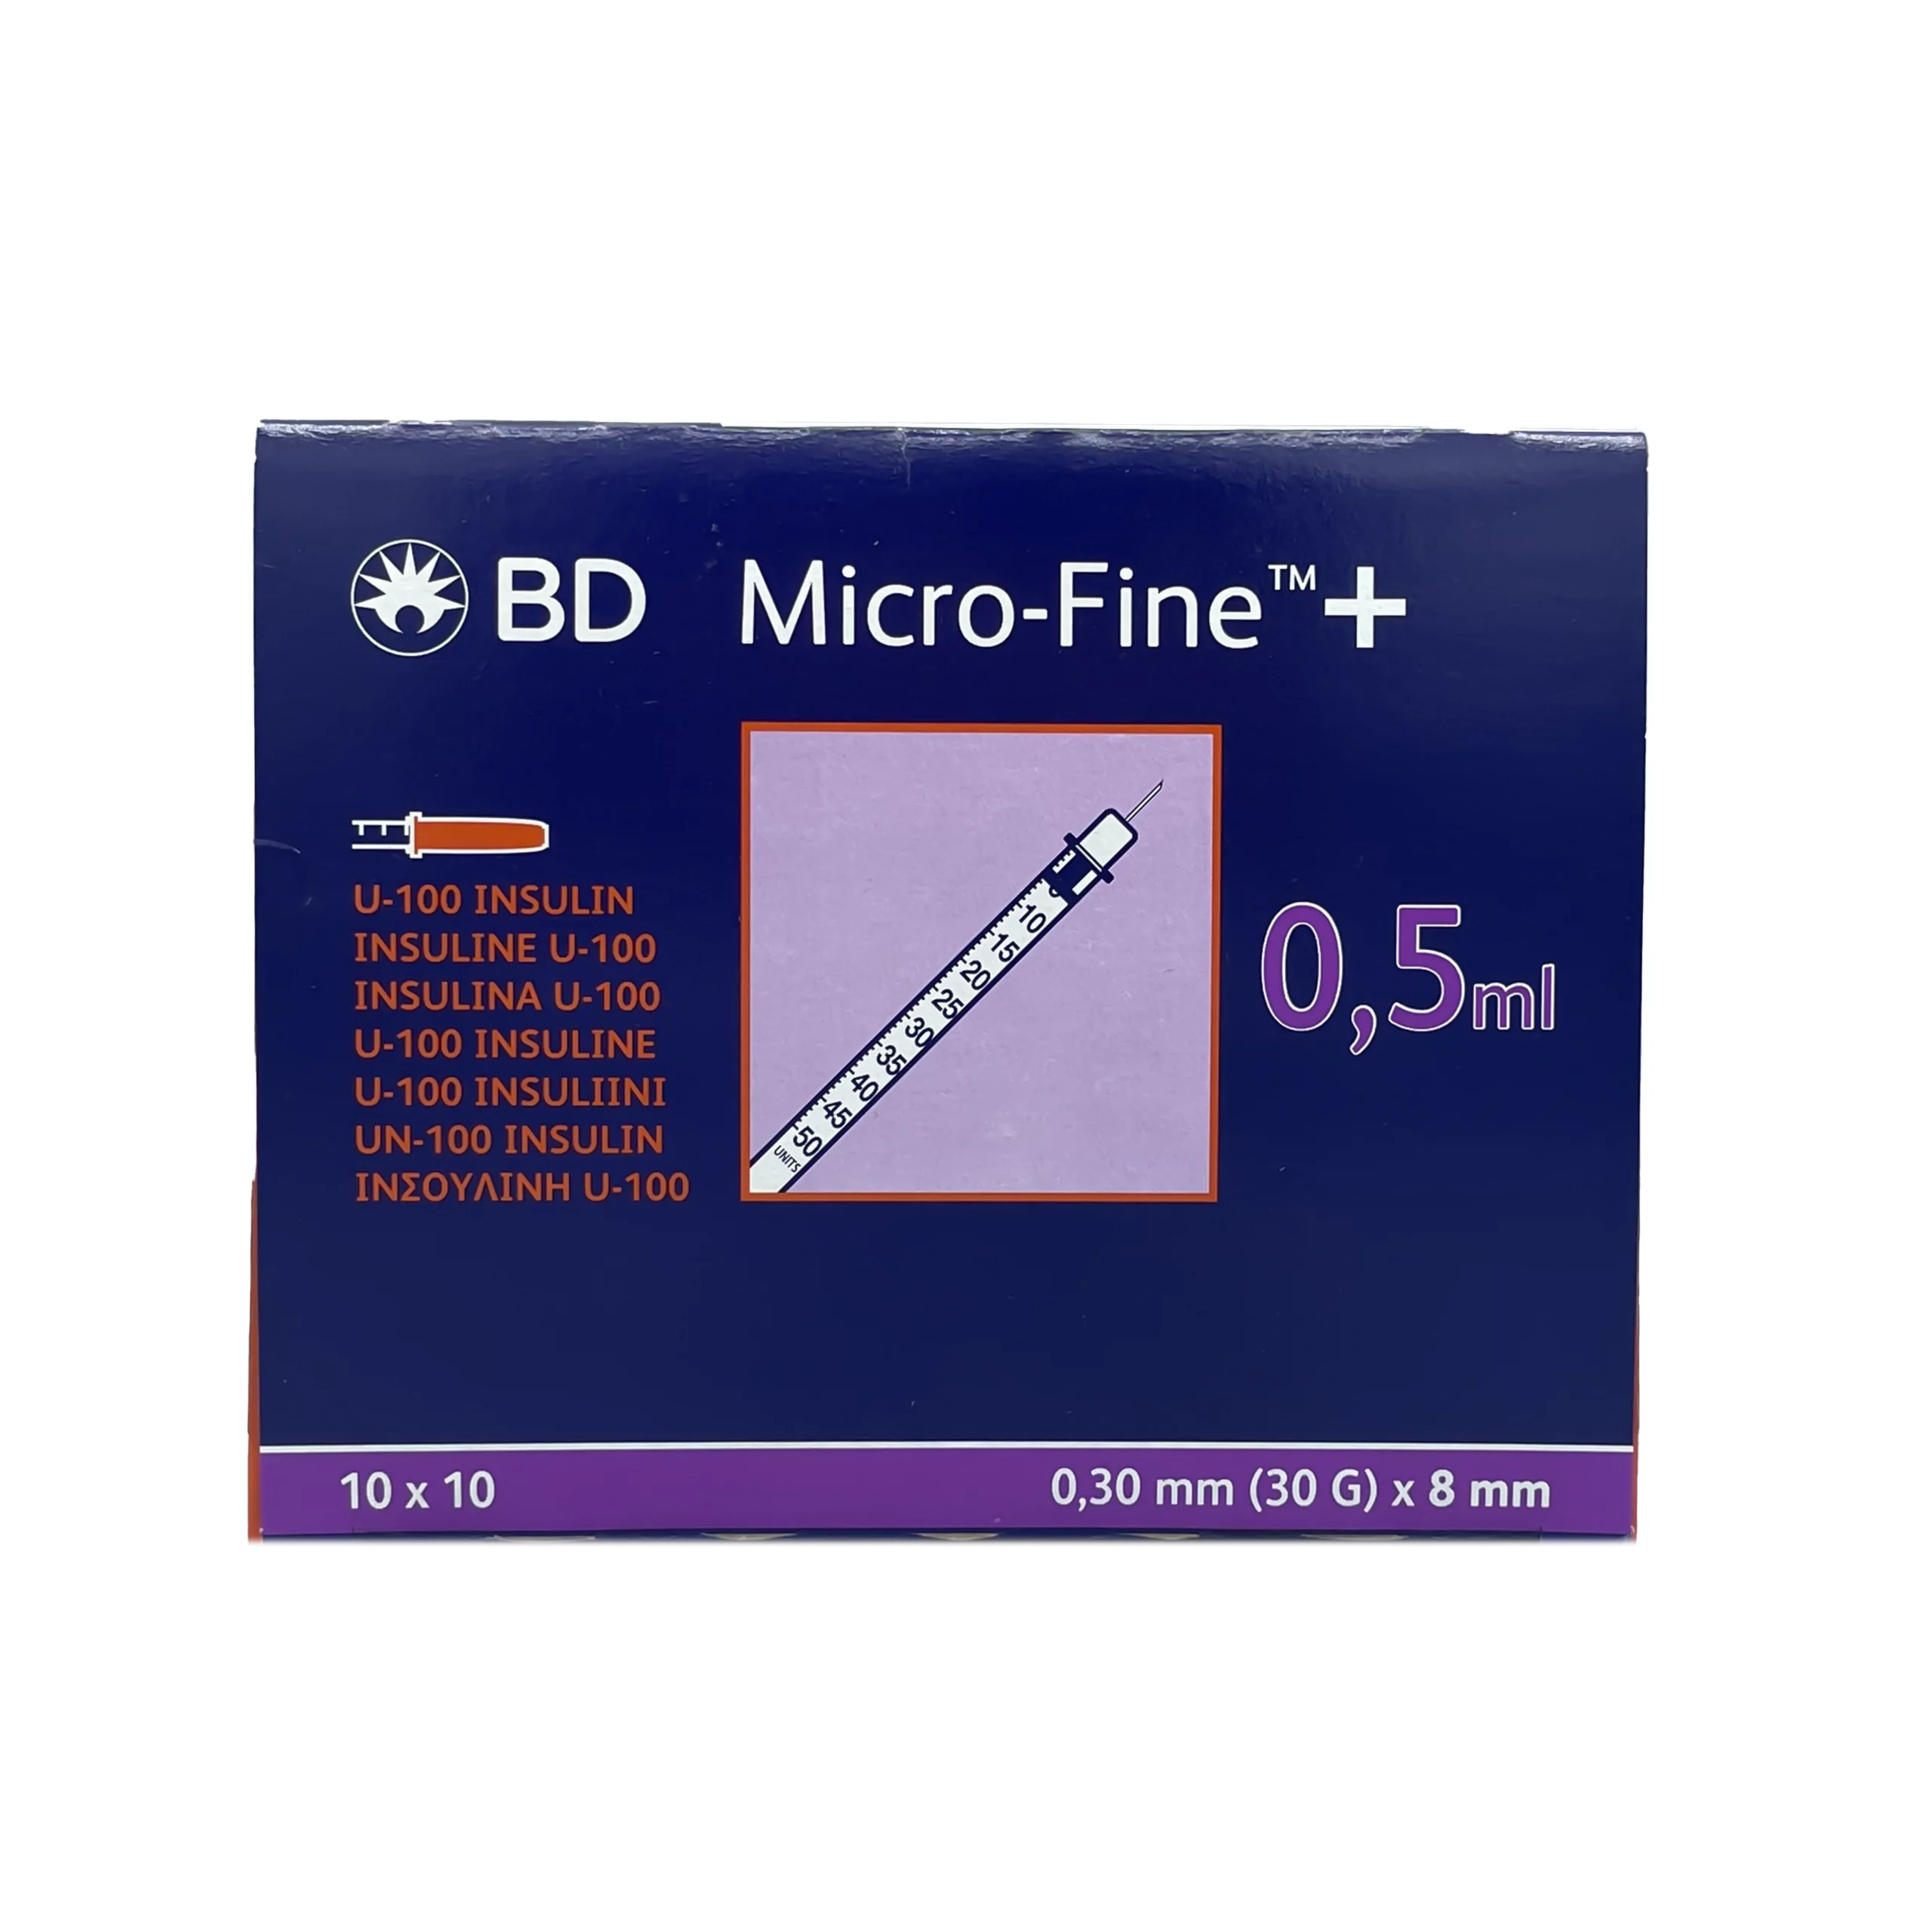 BD Microfine Insulin Syringes 0.5ml